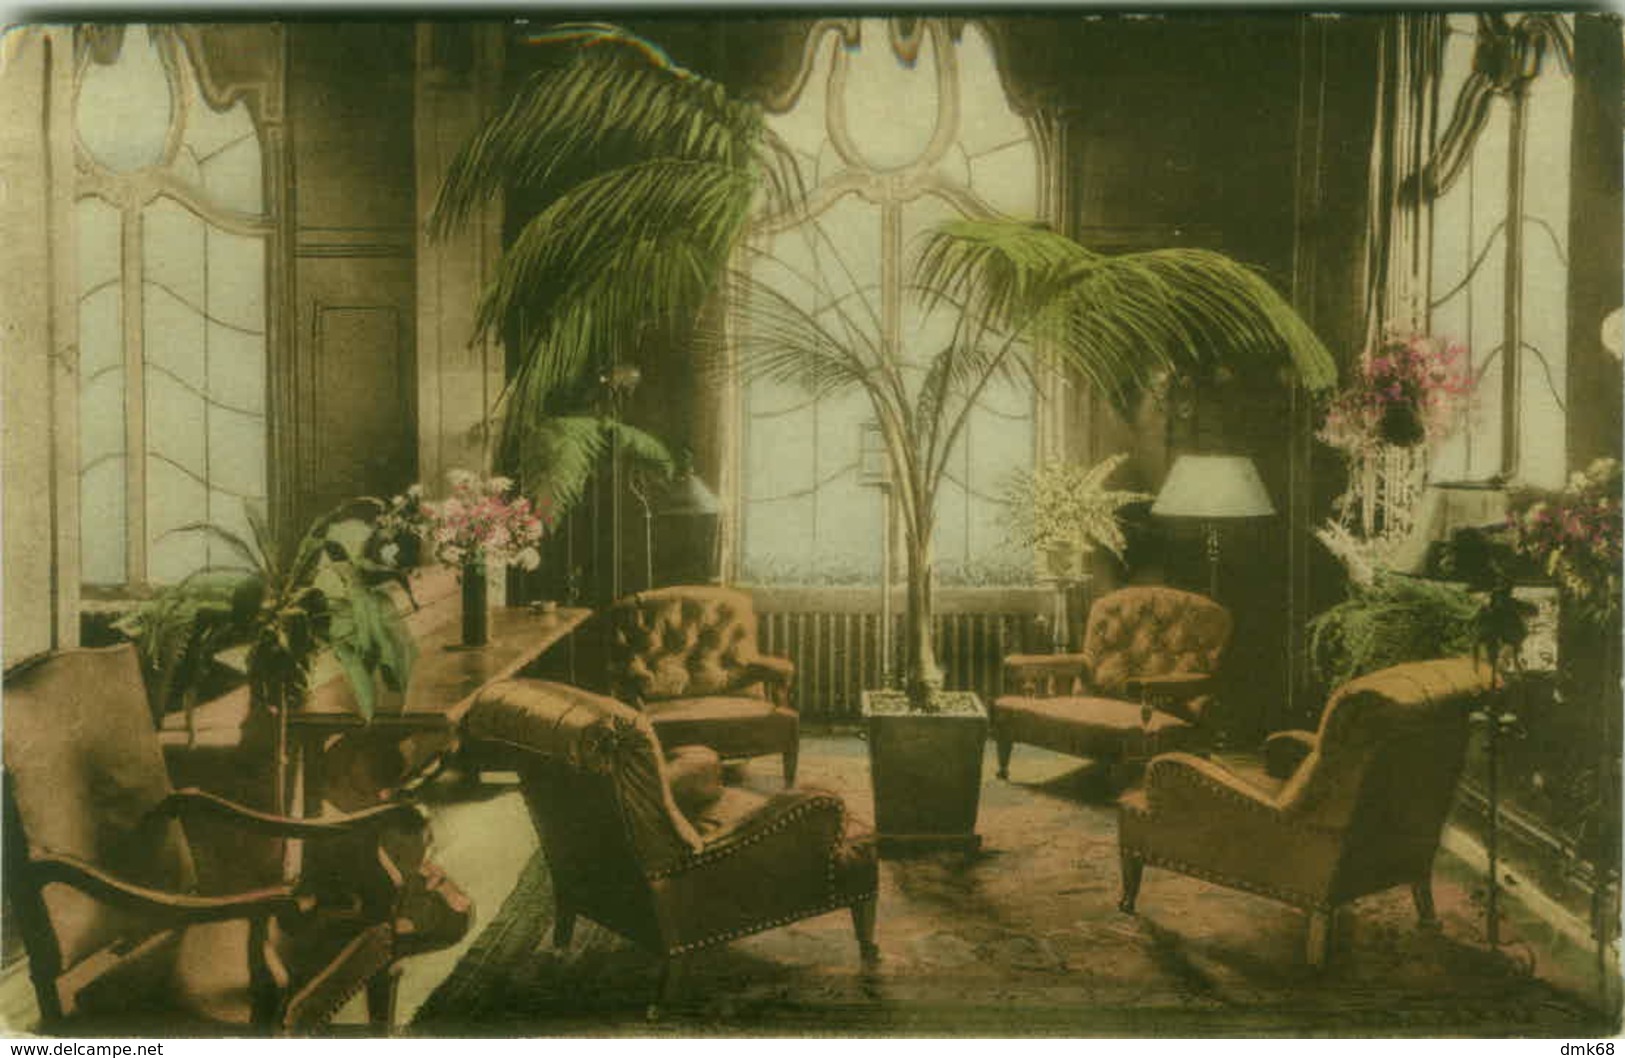 U.S.A. WATERBURY - HOTEL ELTON - A CORNER OF THE FOYER - 1920s (BG1780) - Waterbury